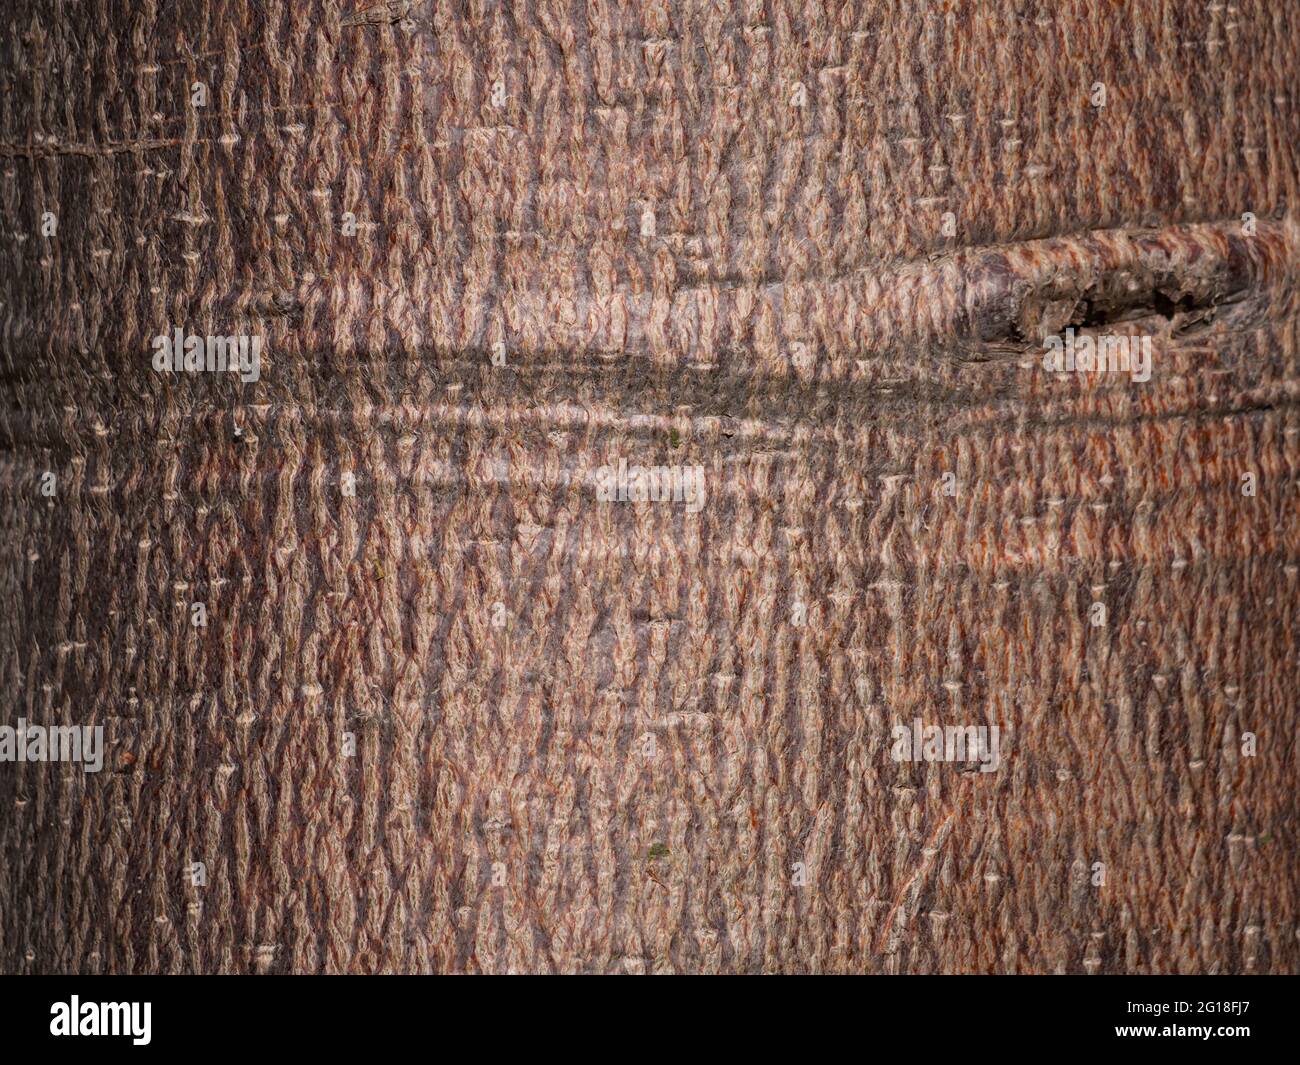 Boab tree, Adansonia gregorii, in Kimberly region of Western Australia. Stock Photo